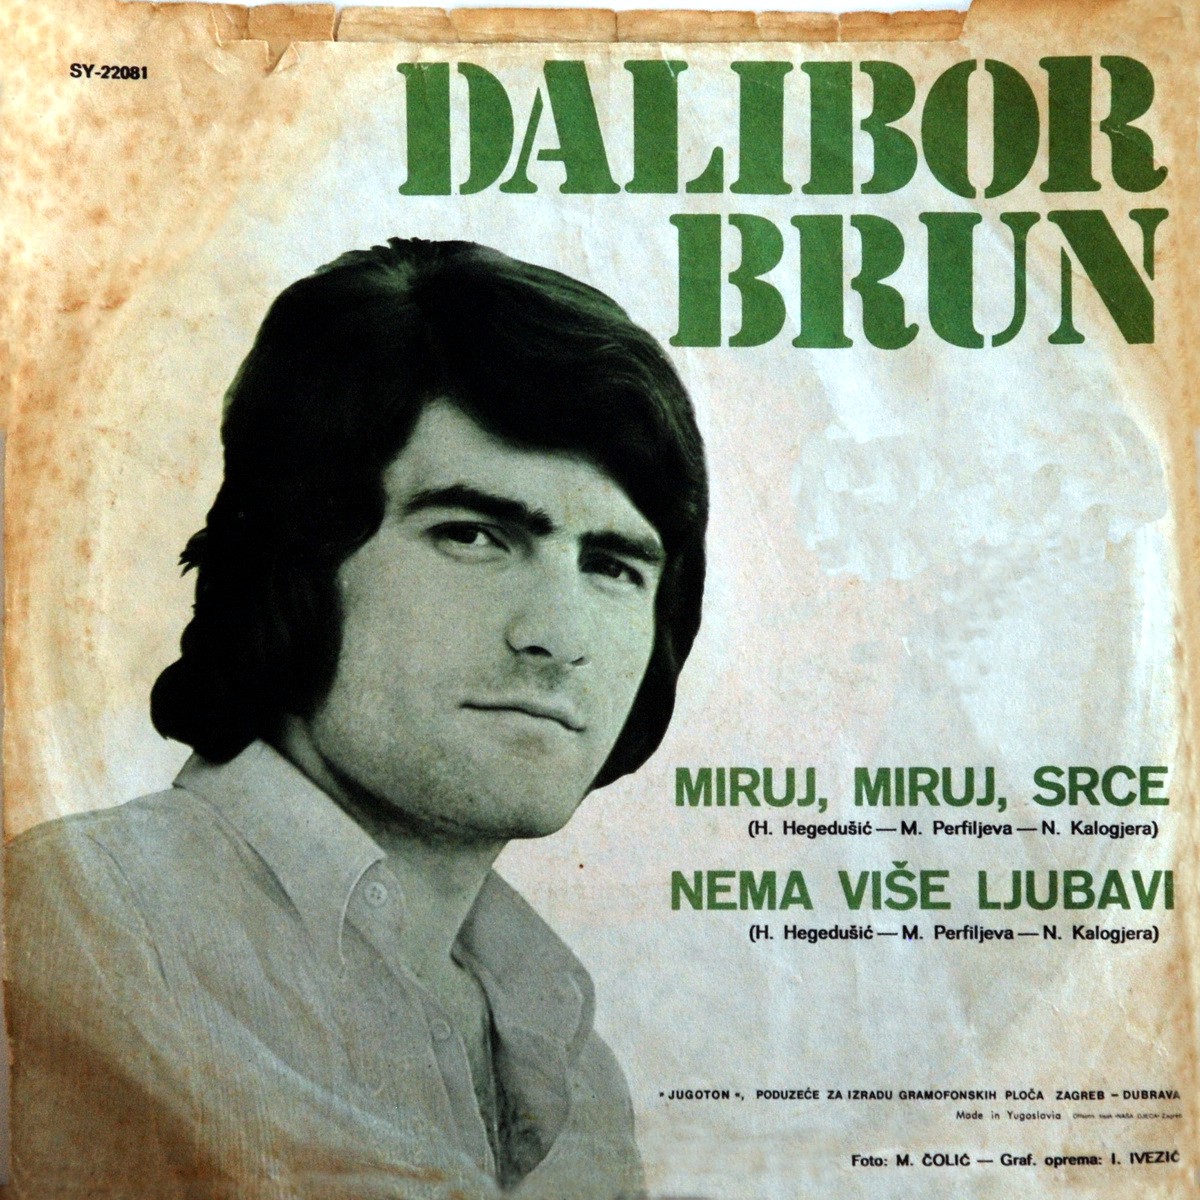 Dalibor Brun 1972 Miruj miruj srce b